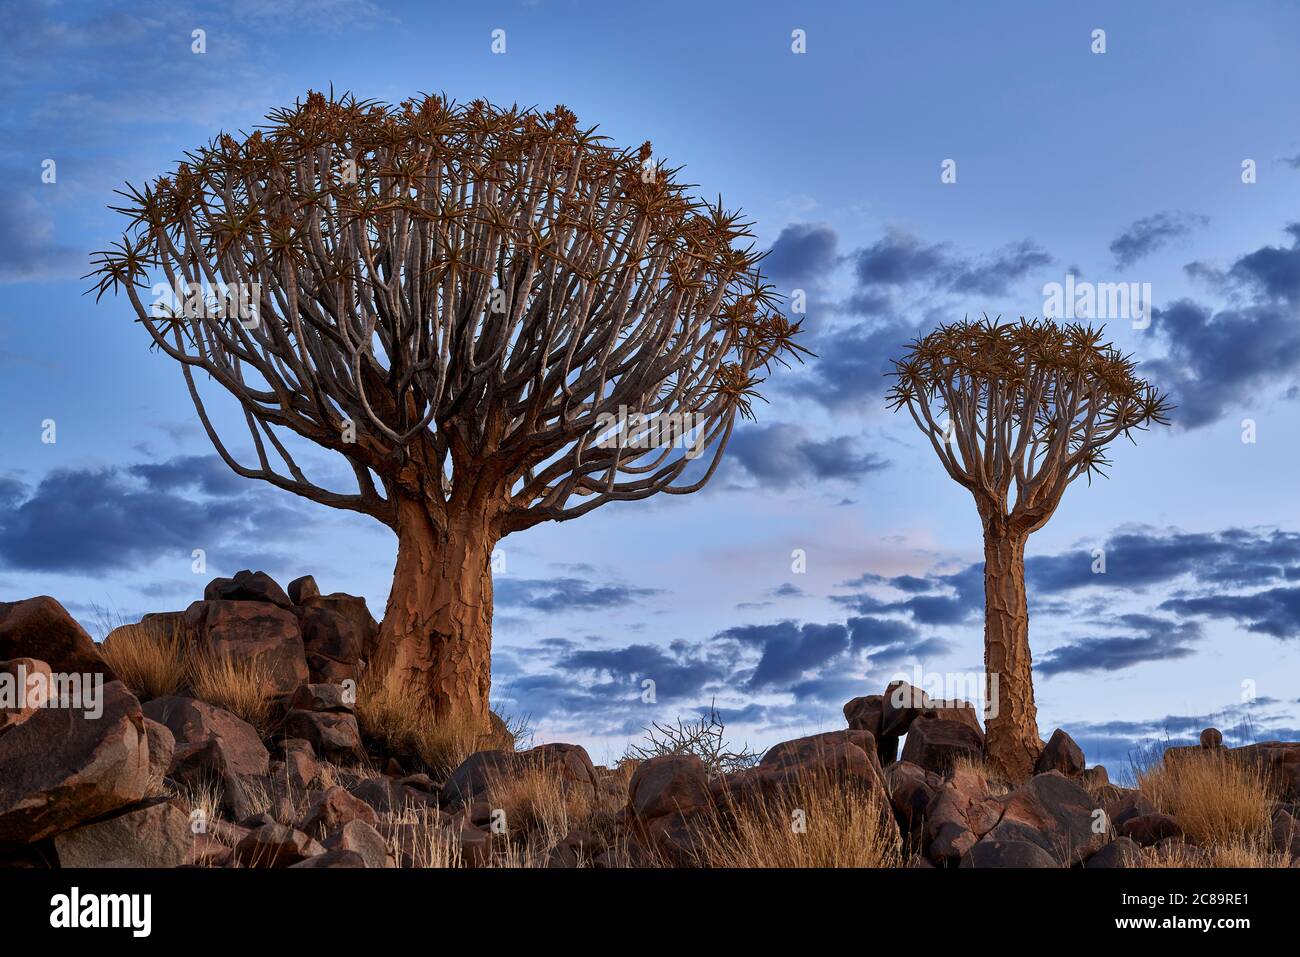 Sonnenuntergang im Köcherbaumwald, Aloe dichotoma, Bauernhof Garas, mesosaurus Fossil Site, Keetmanshoop, Namibia, Afrika Stockfoto